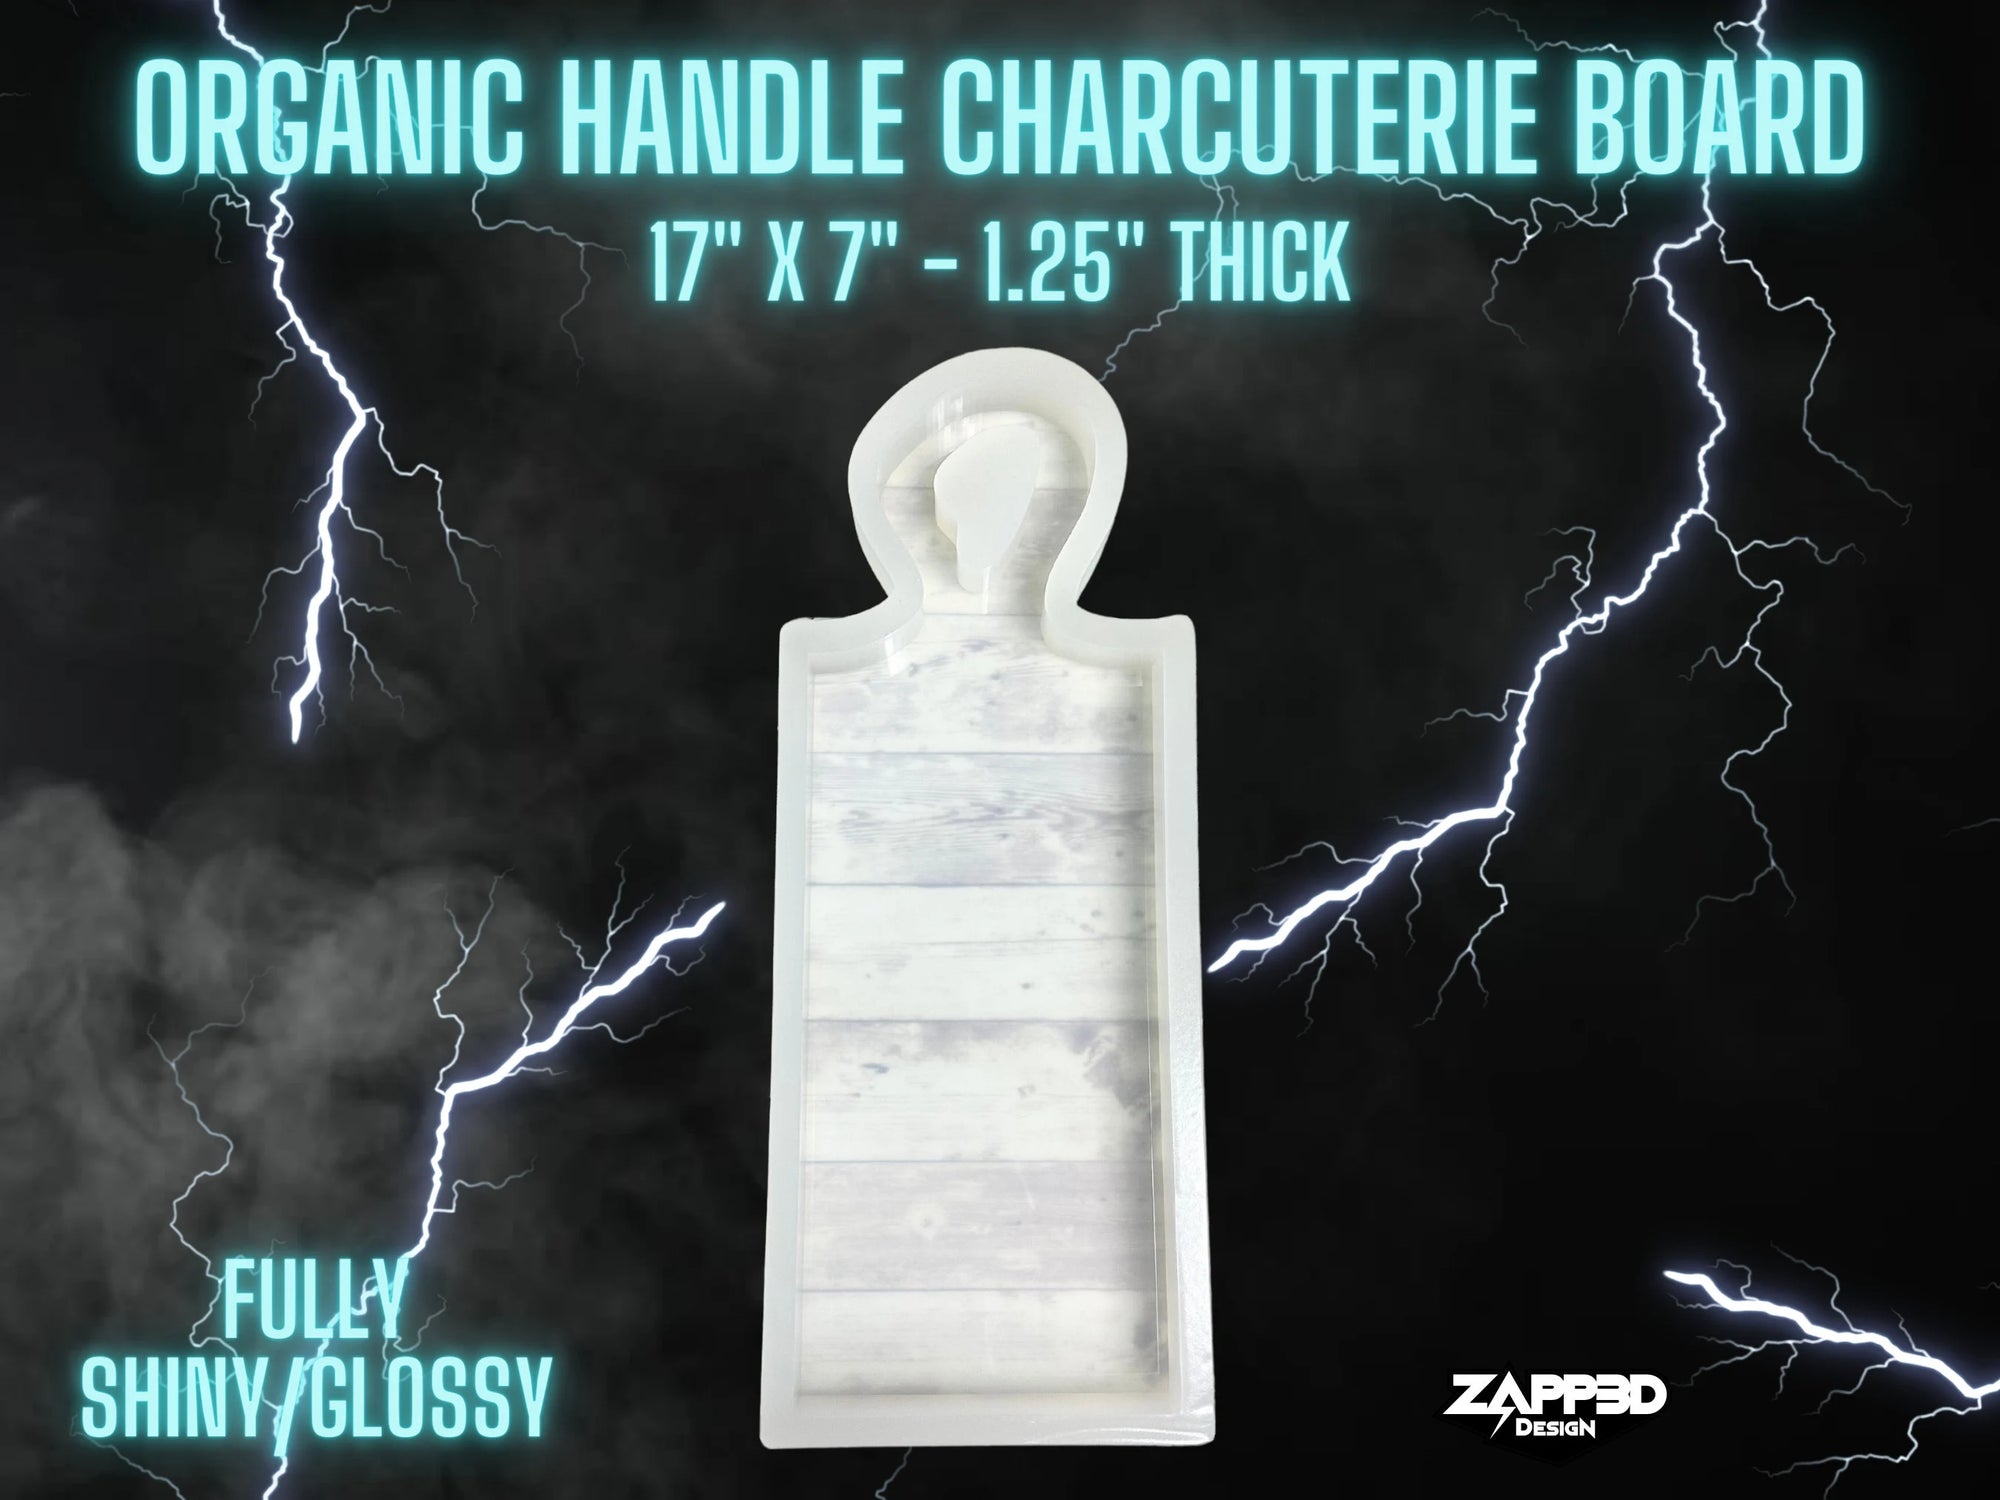 Charcuterie Board Mold | 17"x 7"x 1.25" Deep |  Cheese Board Mold, Organic Handle Charcuterie Board, Charcuterie Mold, Serving Board Mold